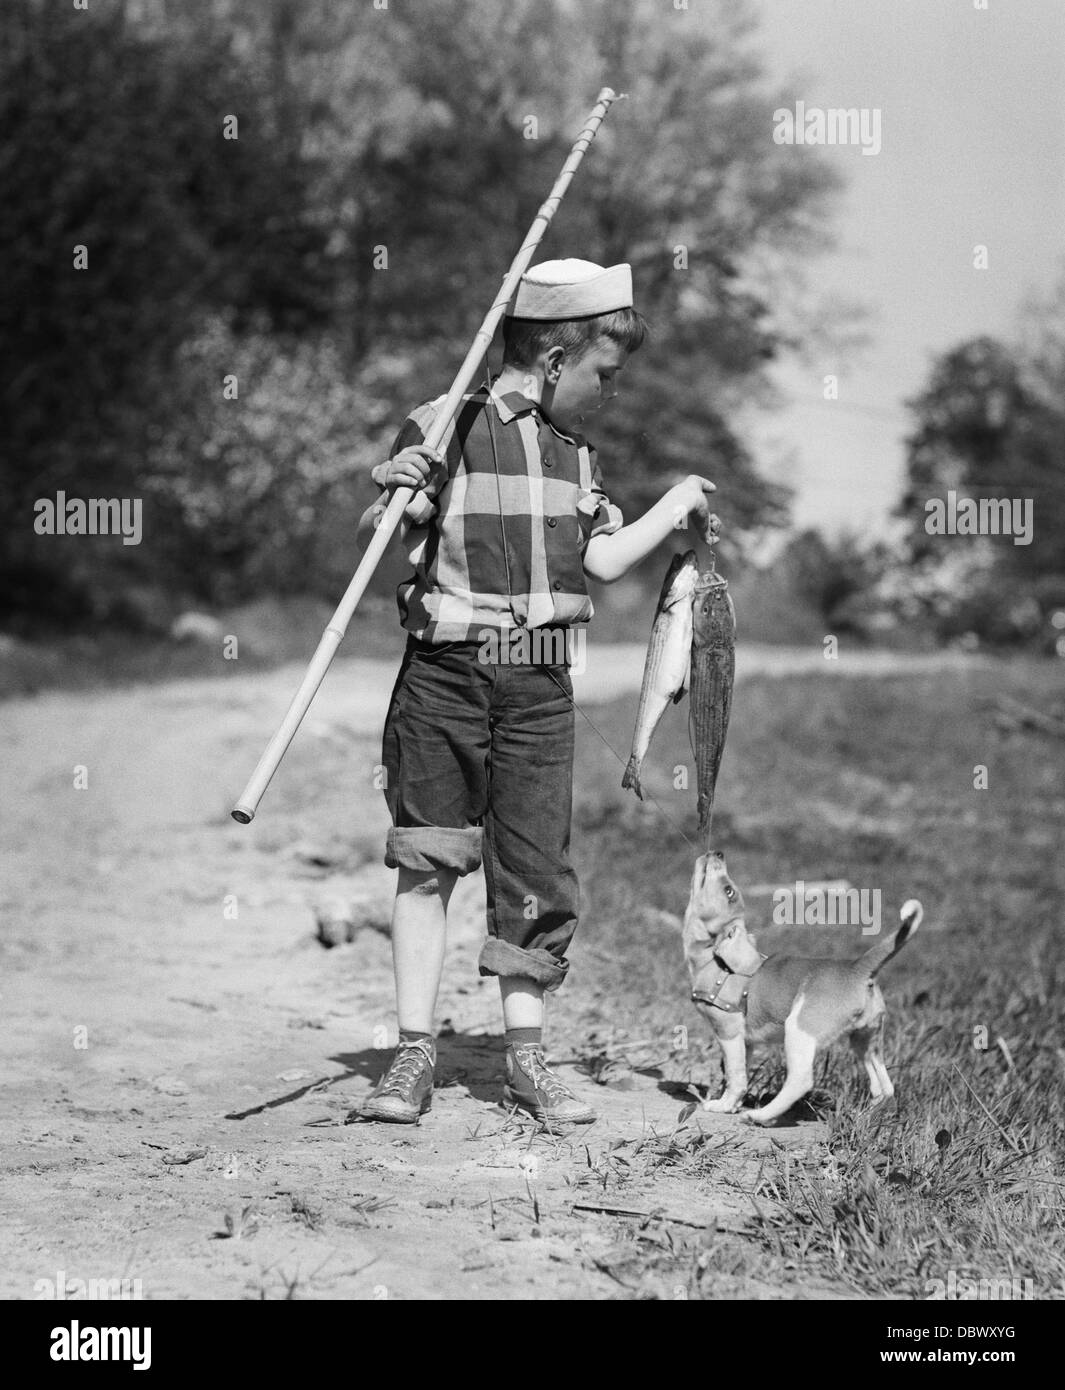 https://c8.alamy.com/comp/DBWXYG/1950s-boy-plaid-shirt-sailor-hat-fishing-pole-dog-pulling-on-tail-DBWXYG.jpg